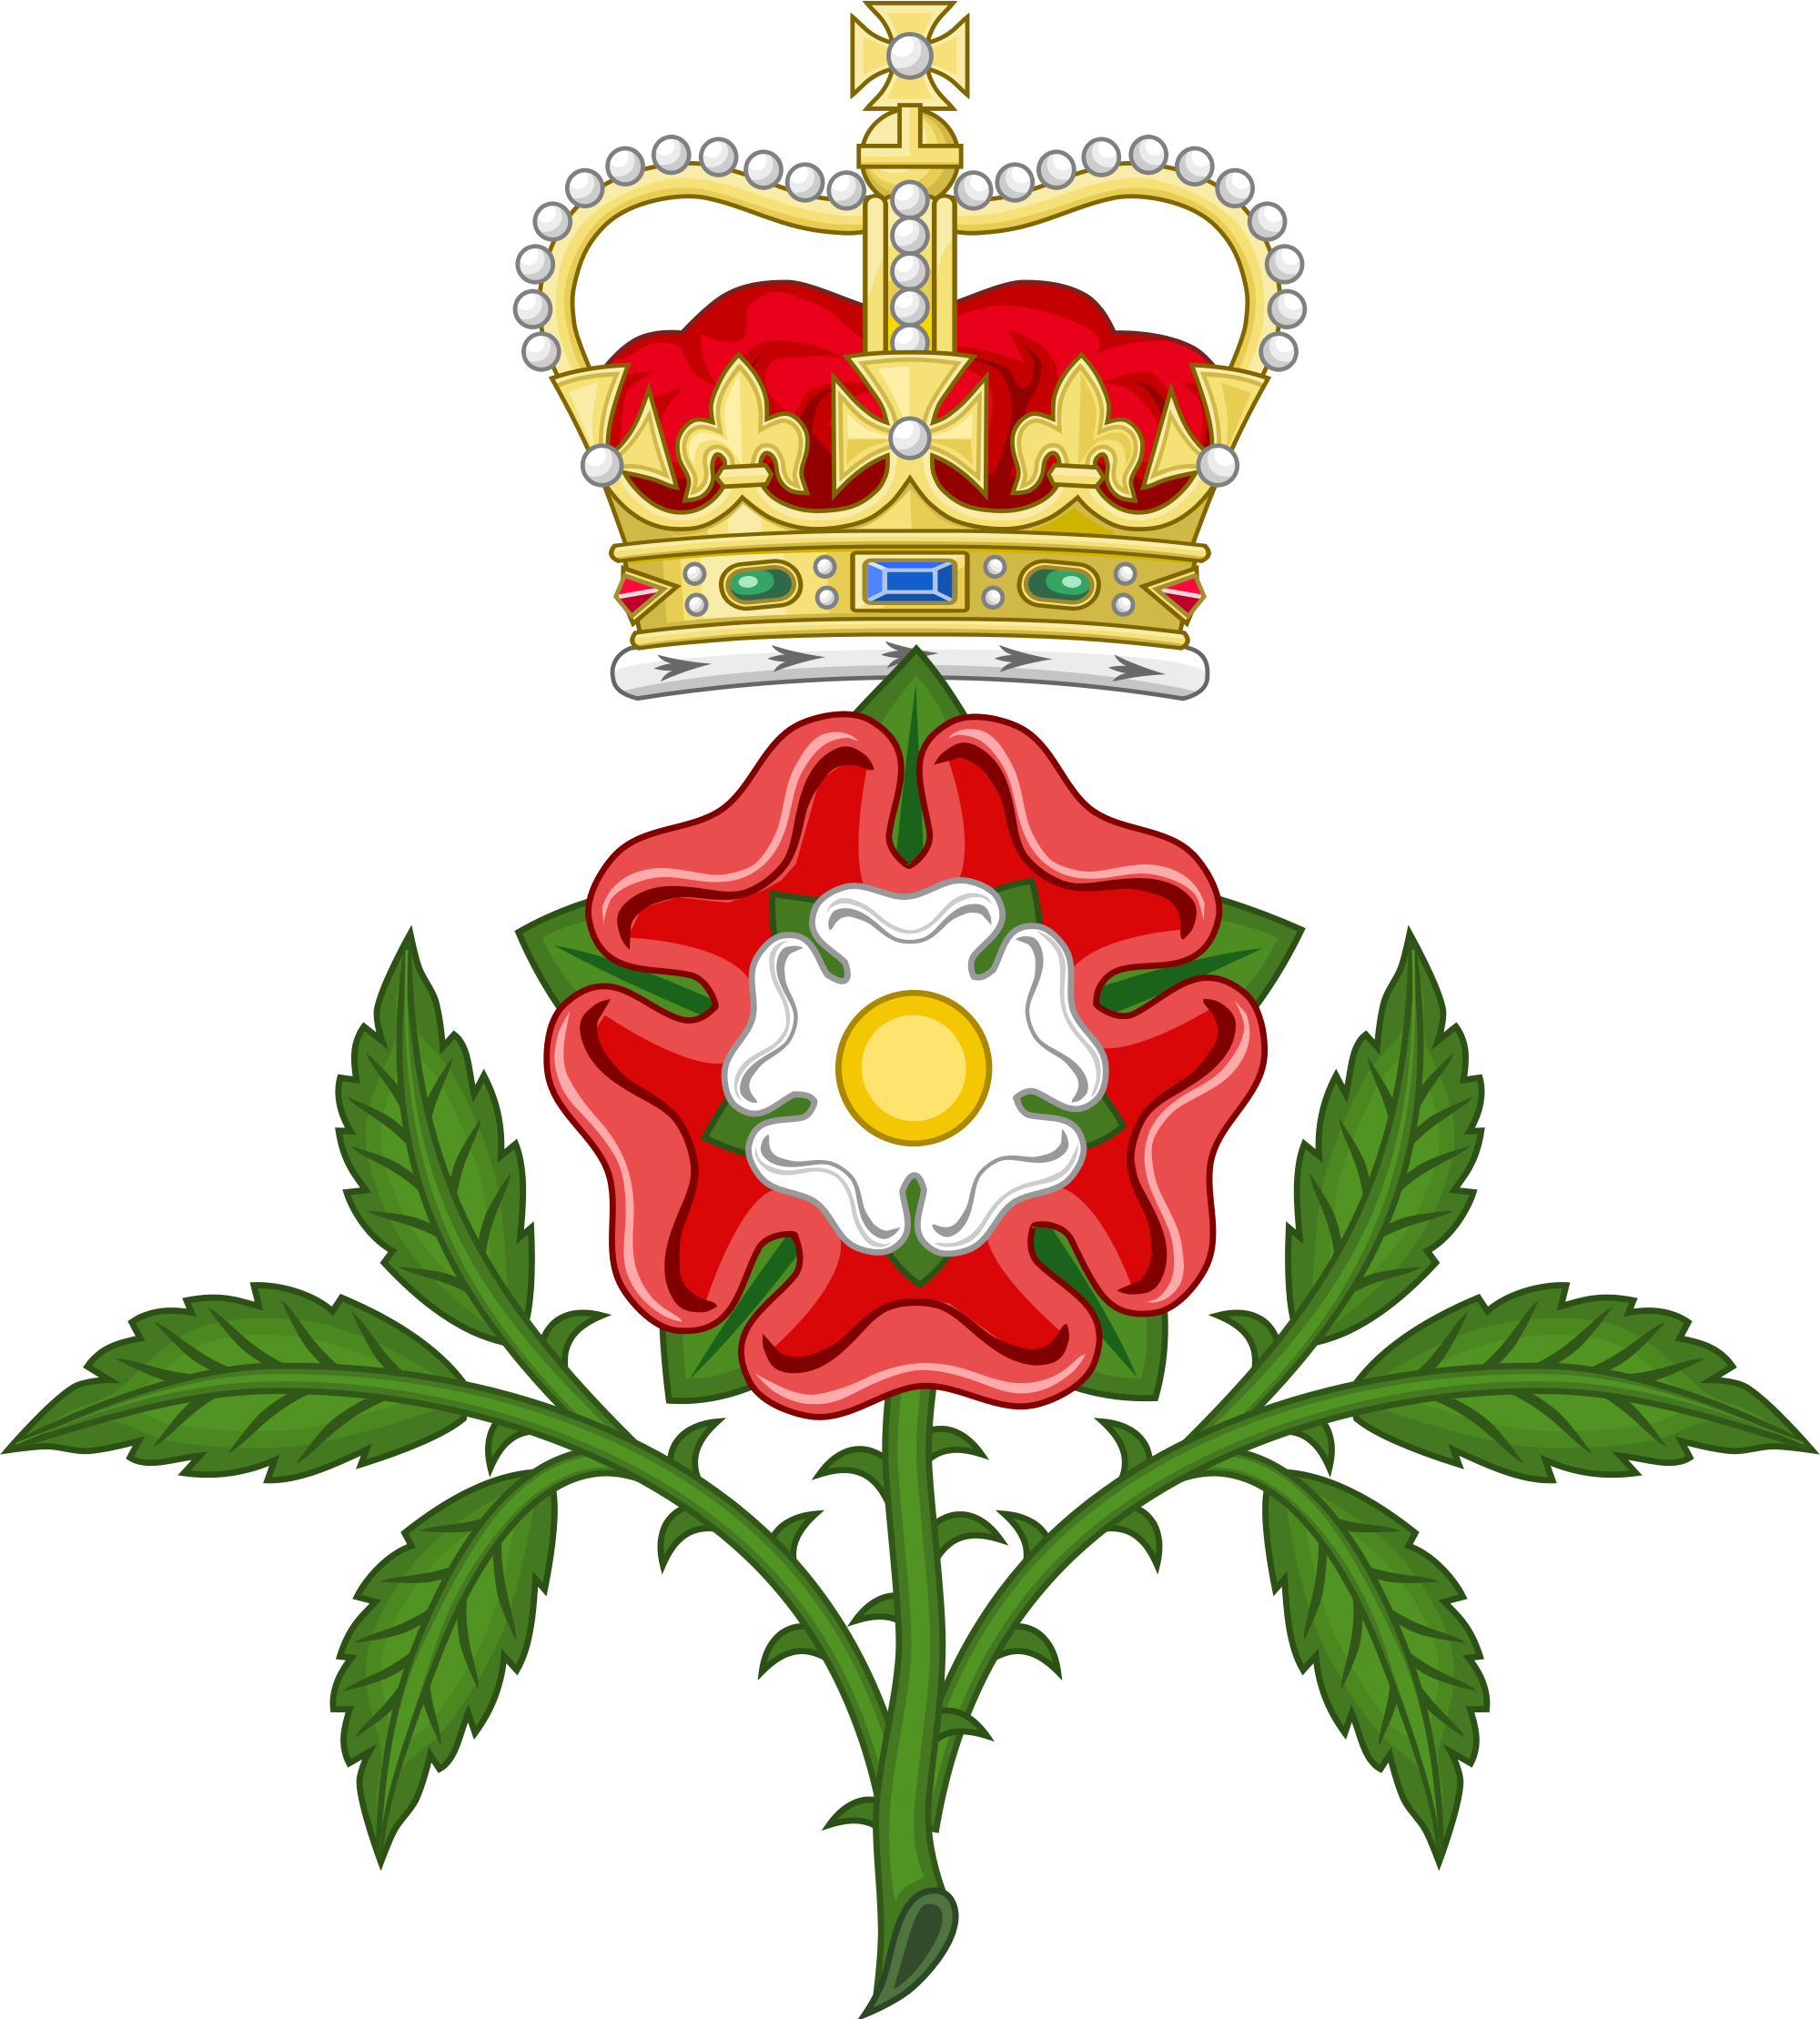 The national symbol of england is. Роза Тюдоров. Роза Тюдоров символ Англии. Тюдоровская роза символ Англии. Герб династии Тюдоров.